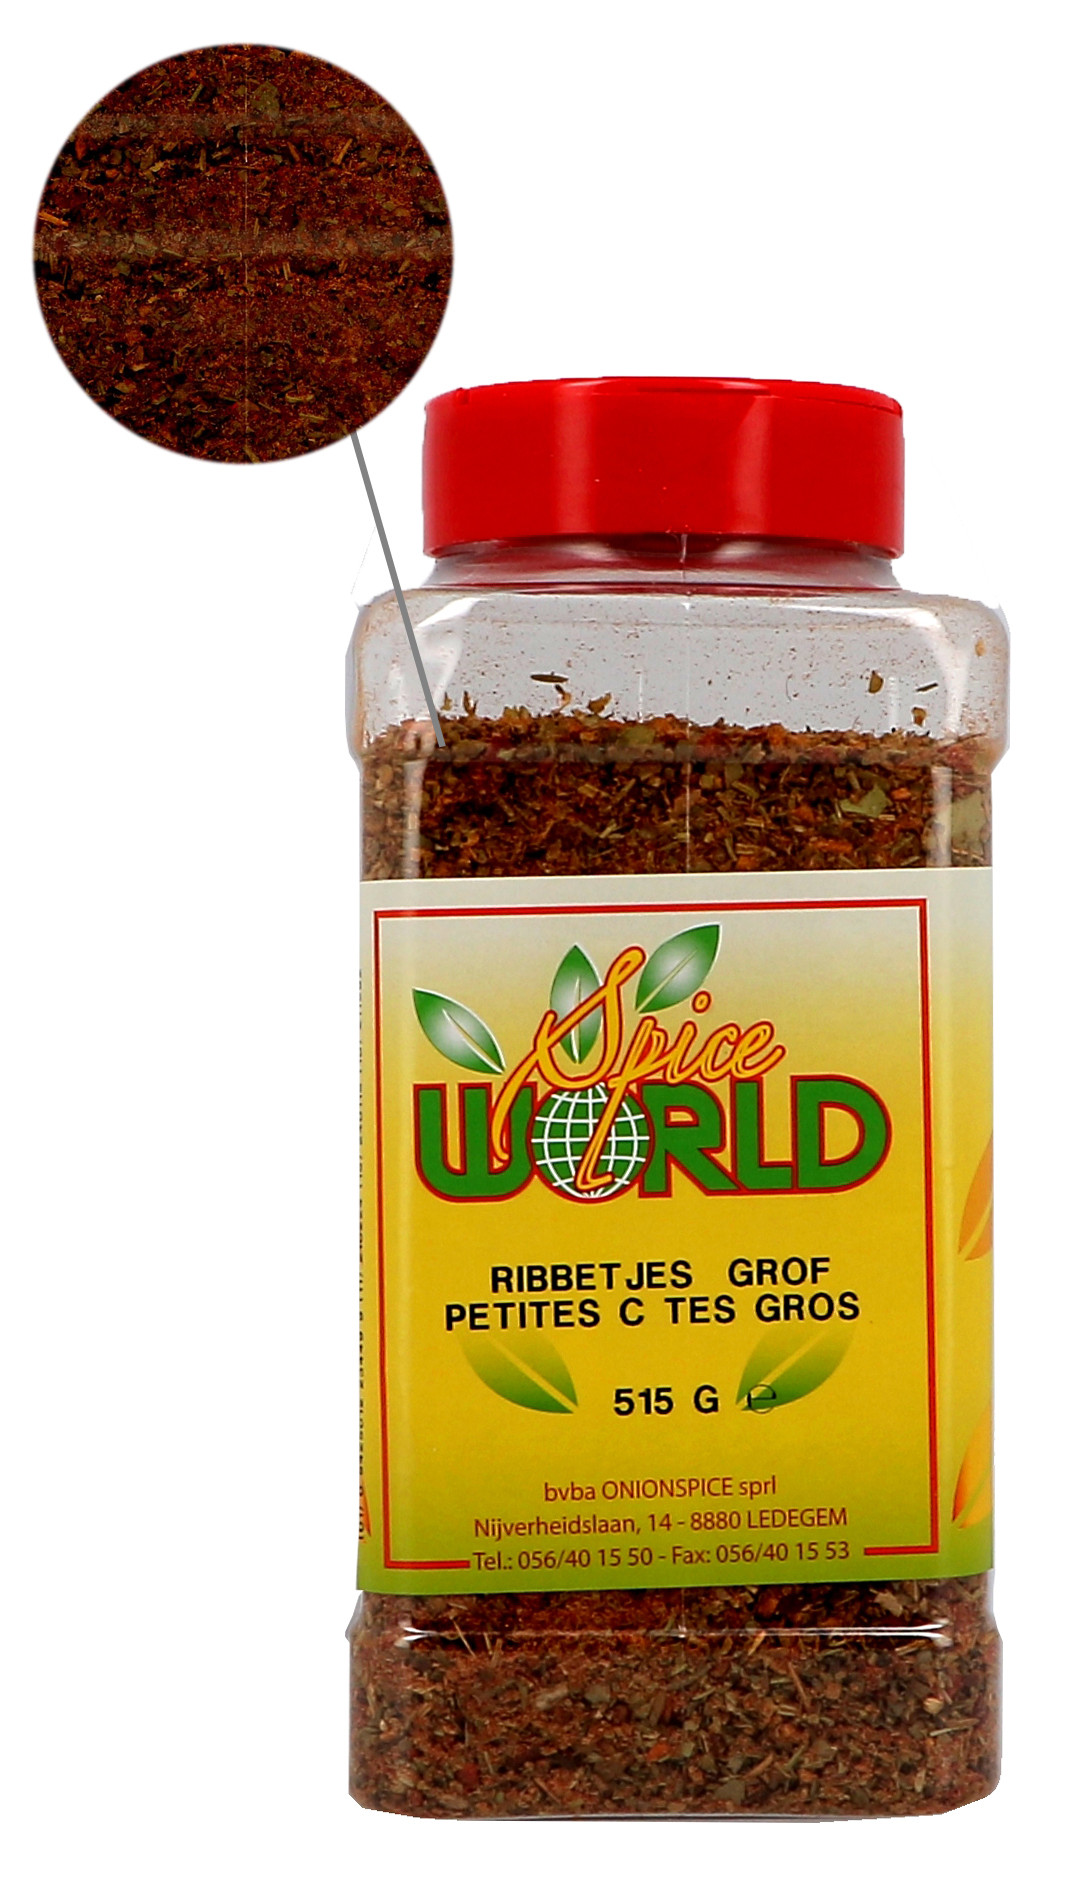 Ribbetjes kruiden mix 515gr 1LP Spice World (Isfi & Verstegen)